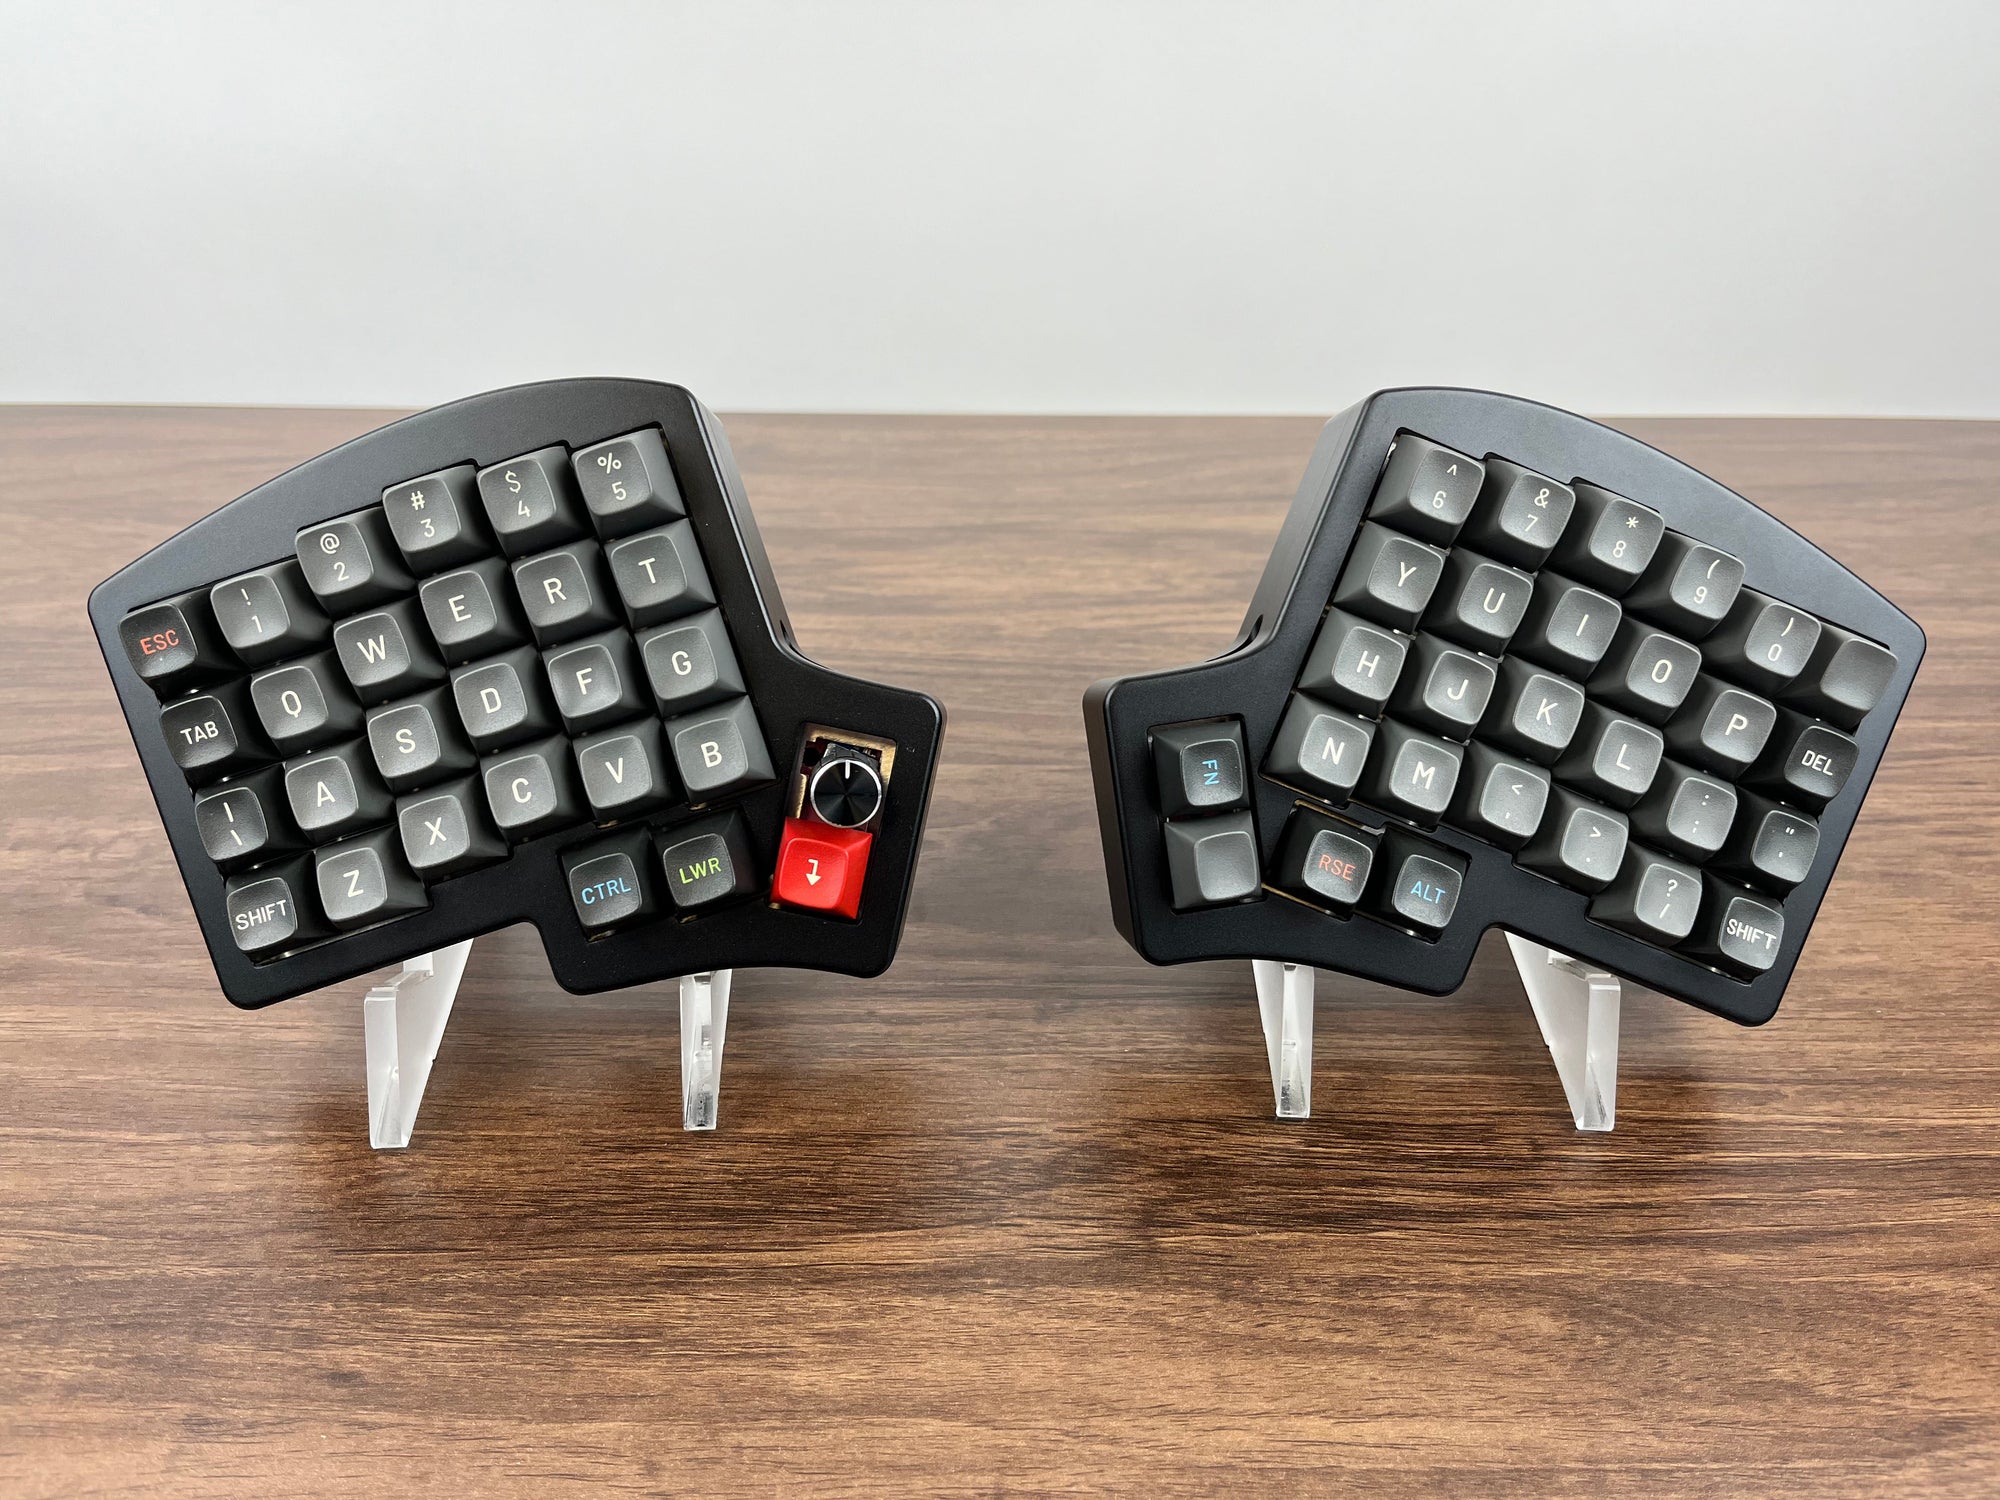 Laser Ninja Mini Keyboard Stand